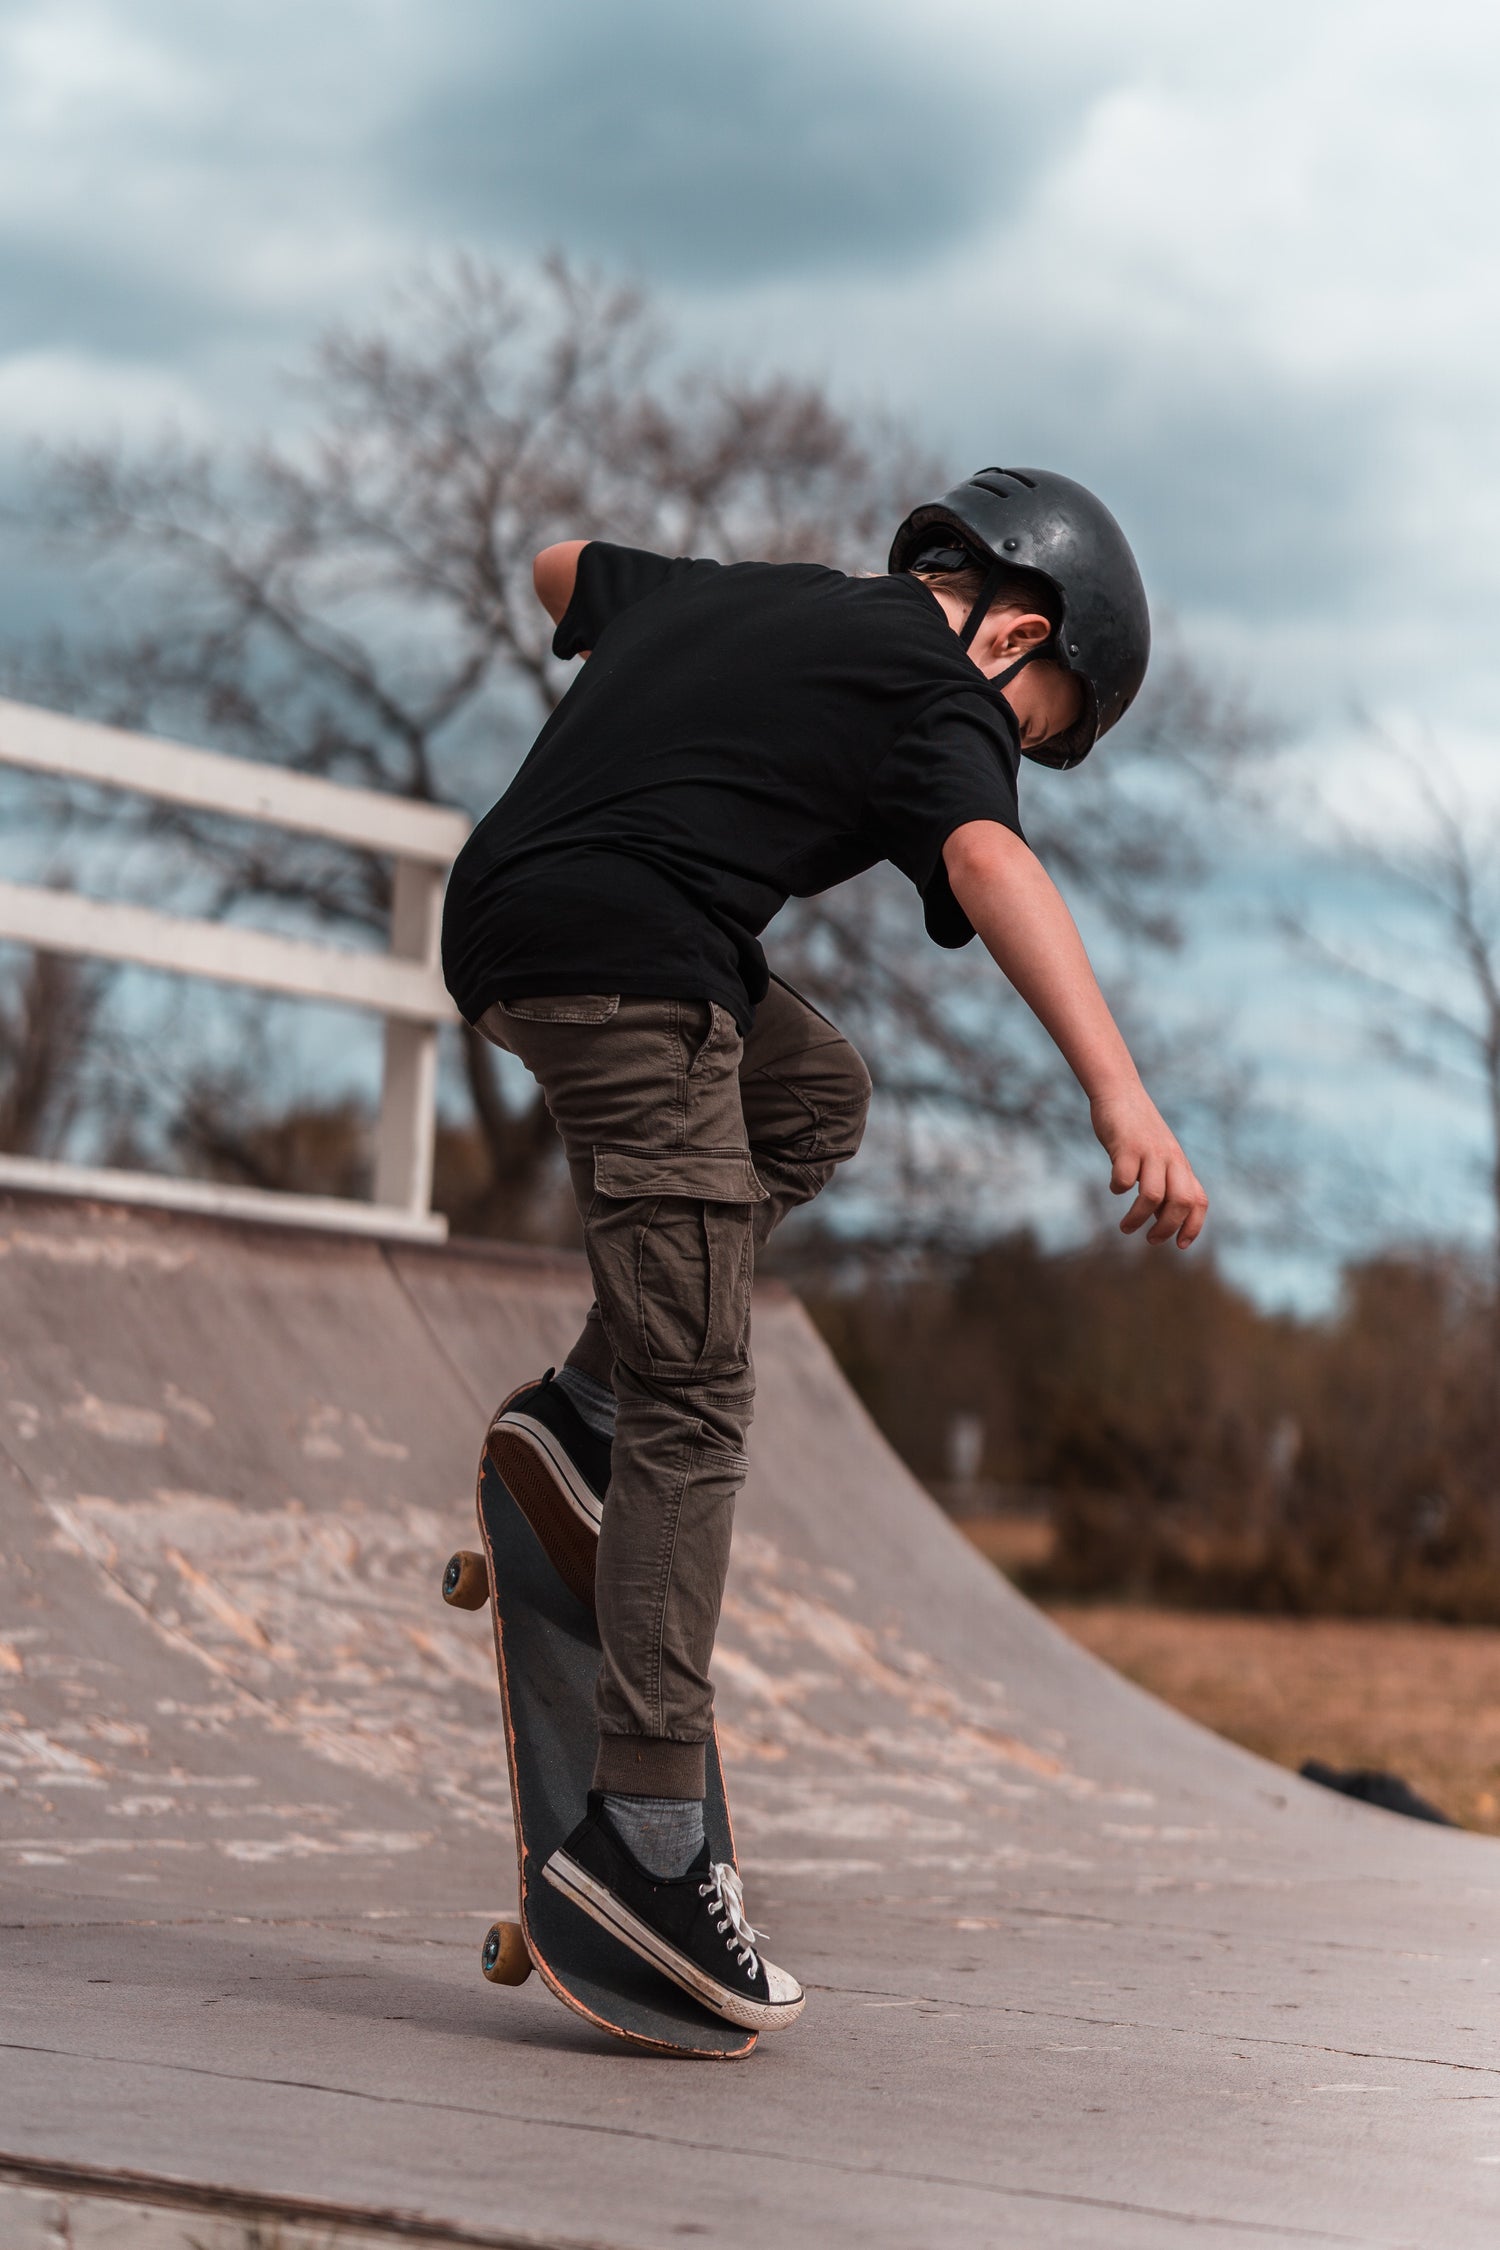 Verbeteren Poging capaciteit Best Kids Skateboards [A Comprehensive Guide]